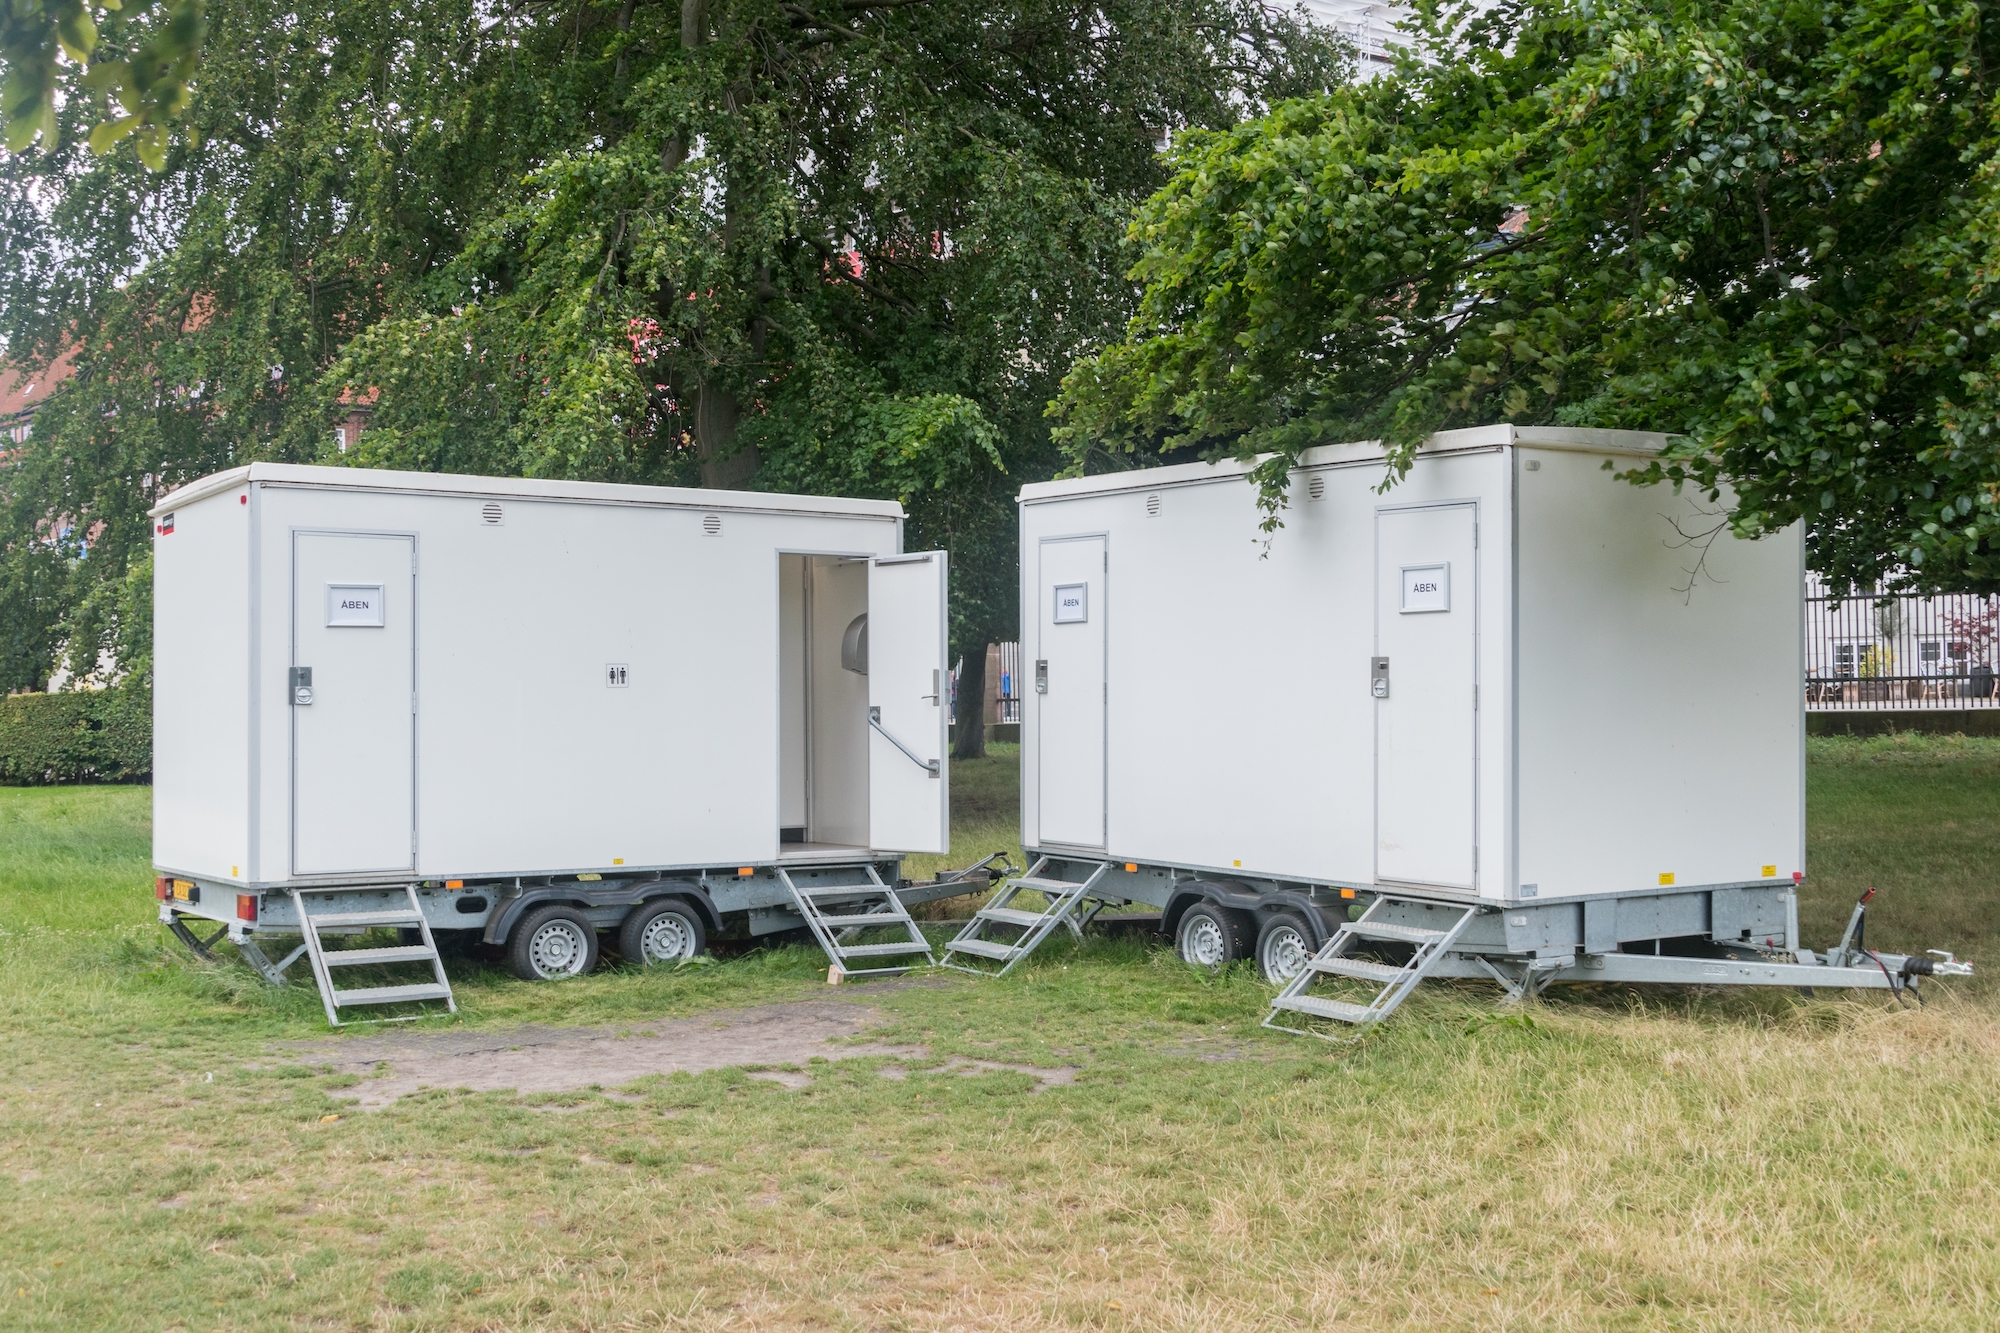 Copenhagen, Denmark - July 26, 2022: Trailers with toilets. Portable toilets.